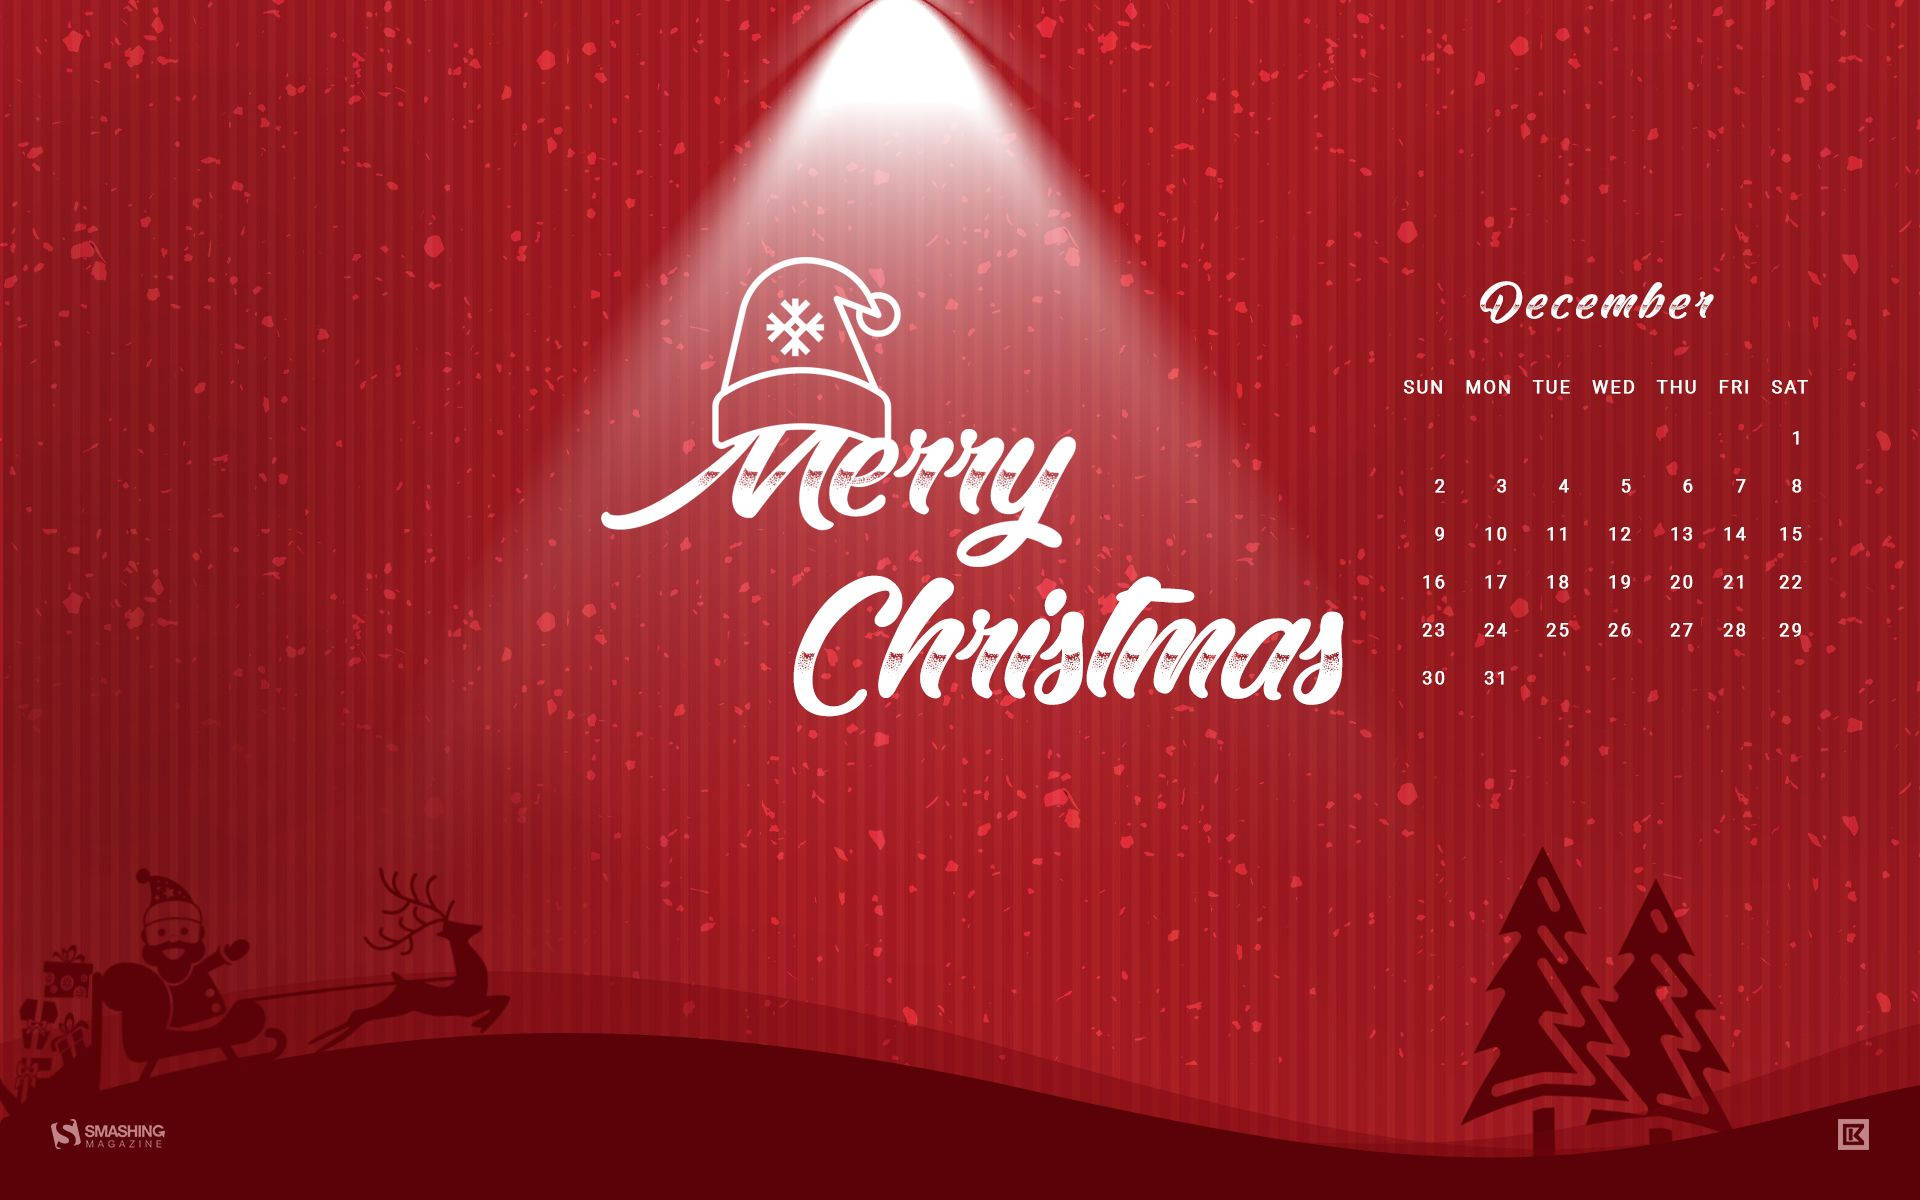 December Red Christmas Calendar Background